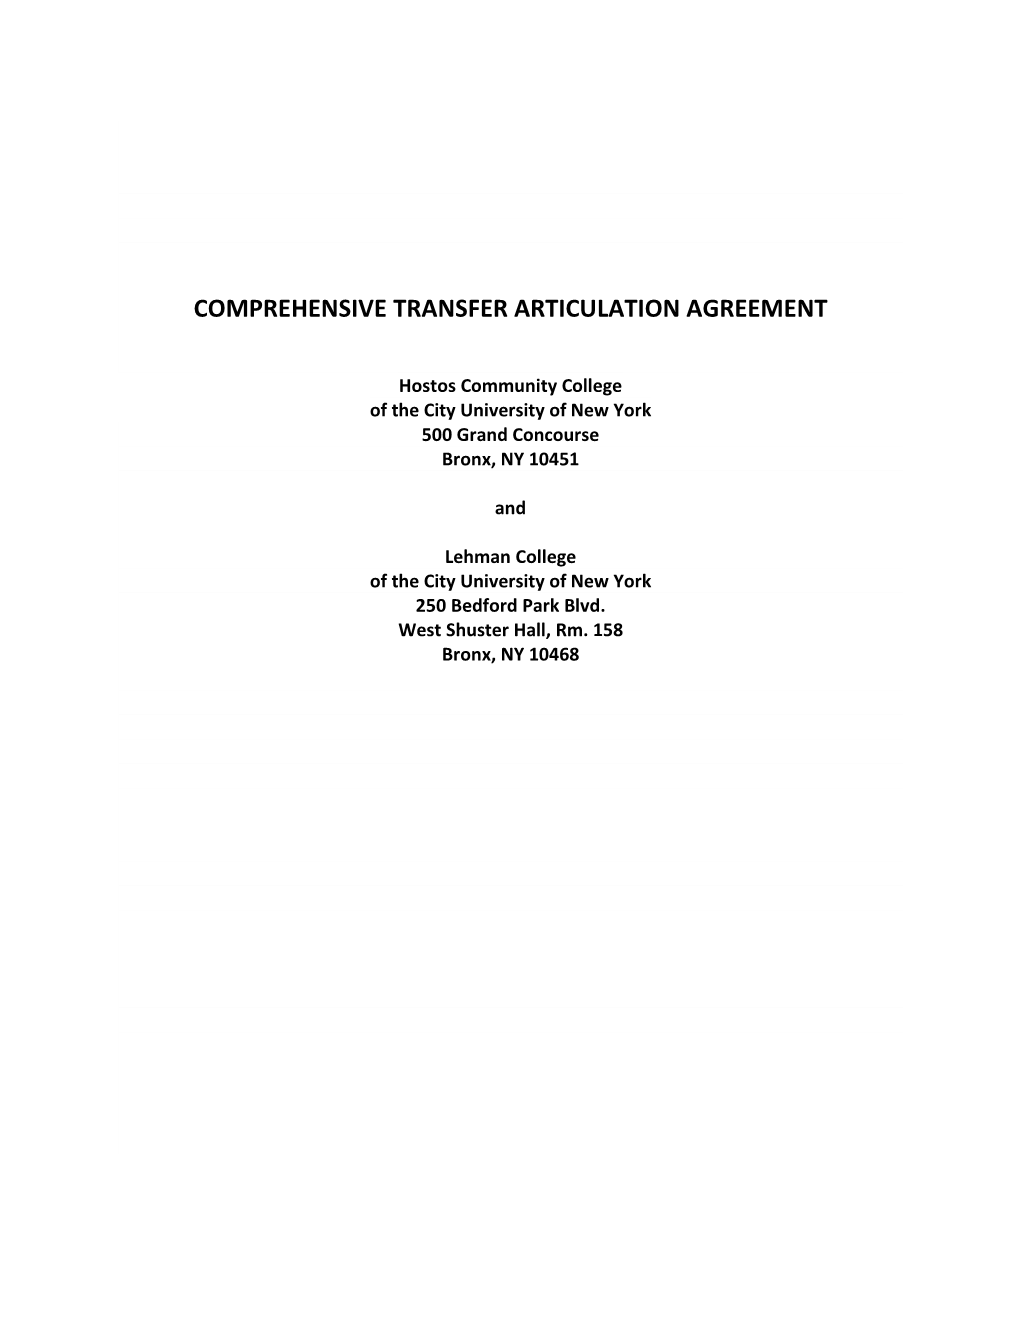 Comprehensive Transfer Articulation Agreement